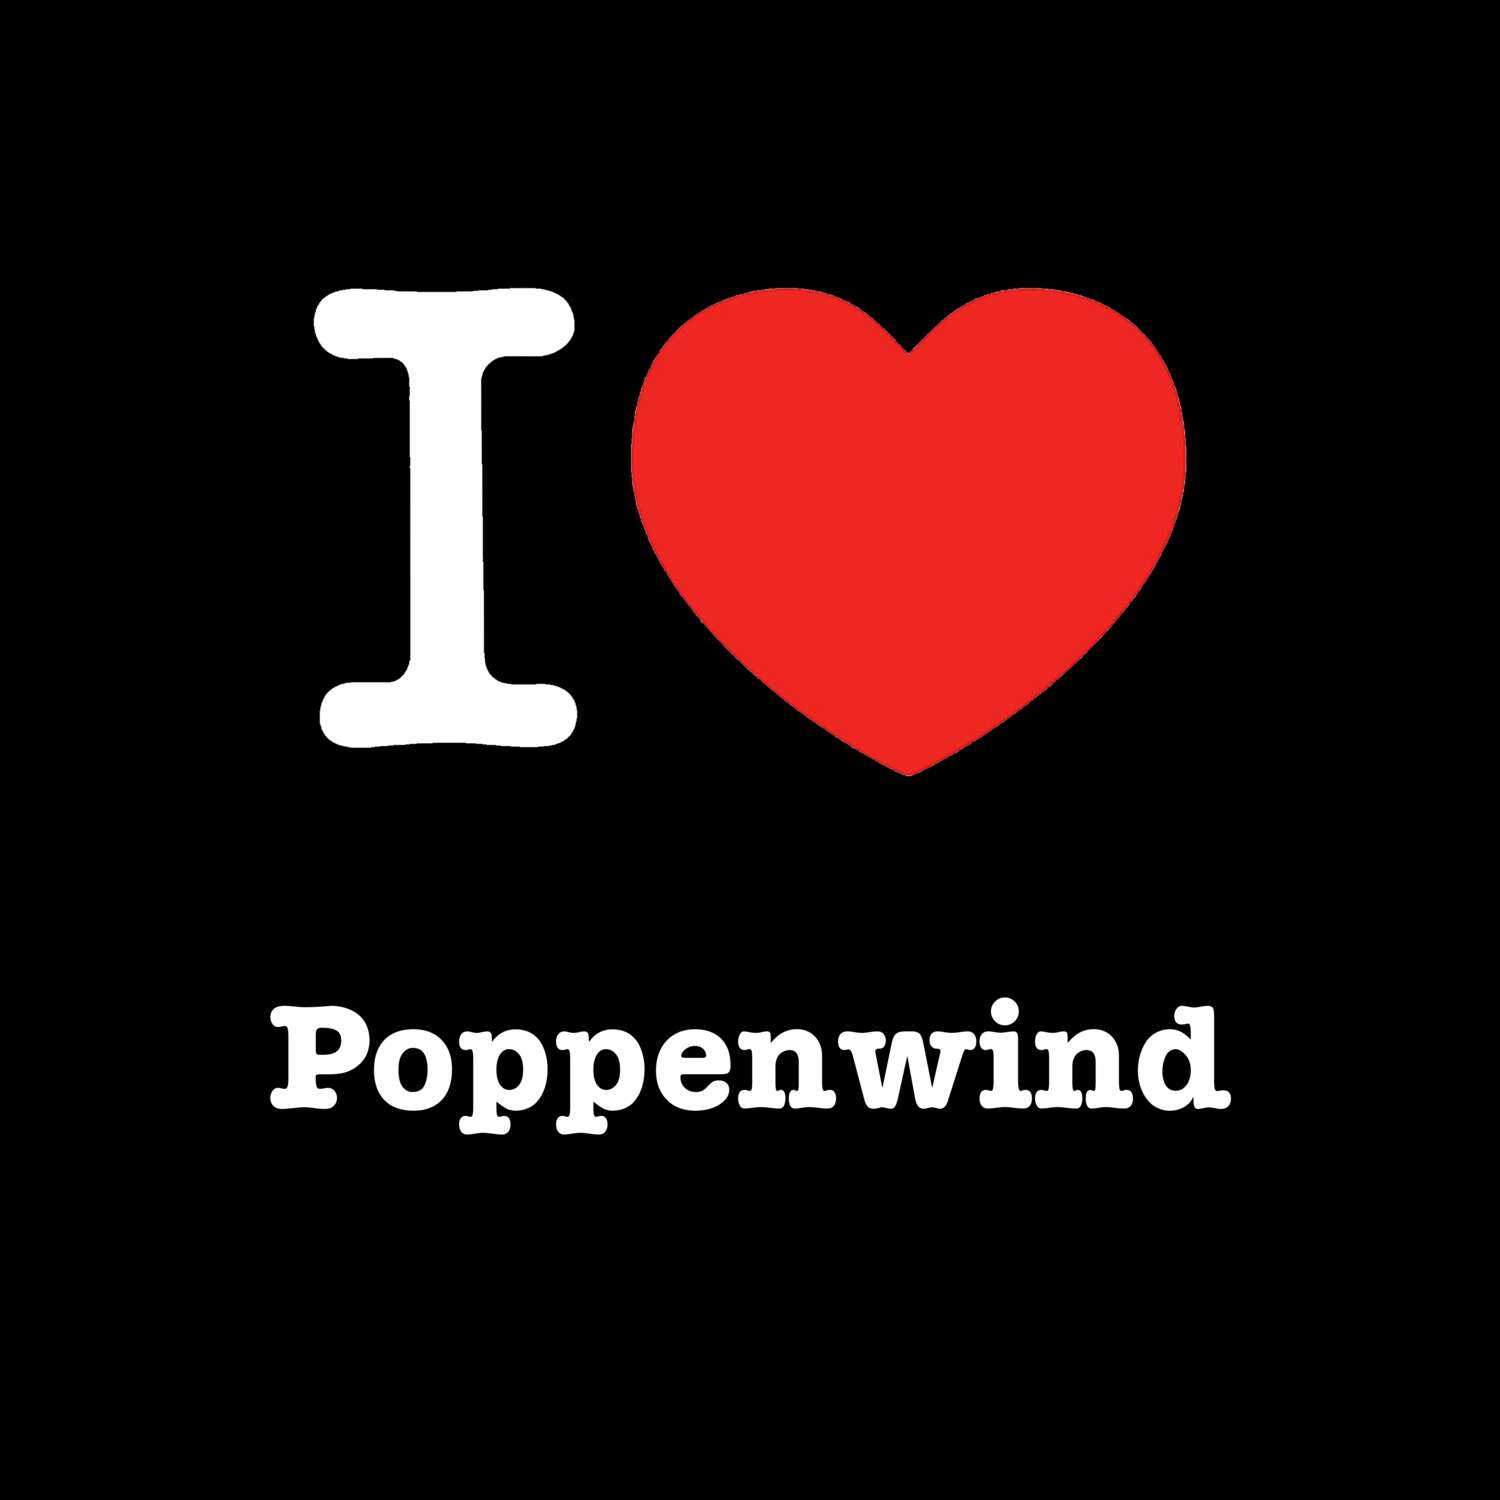 Poppenwind T-Shirt »I love«